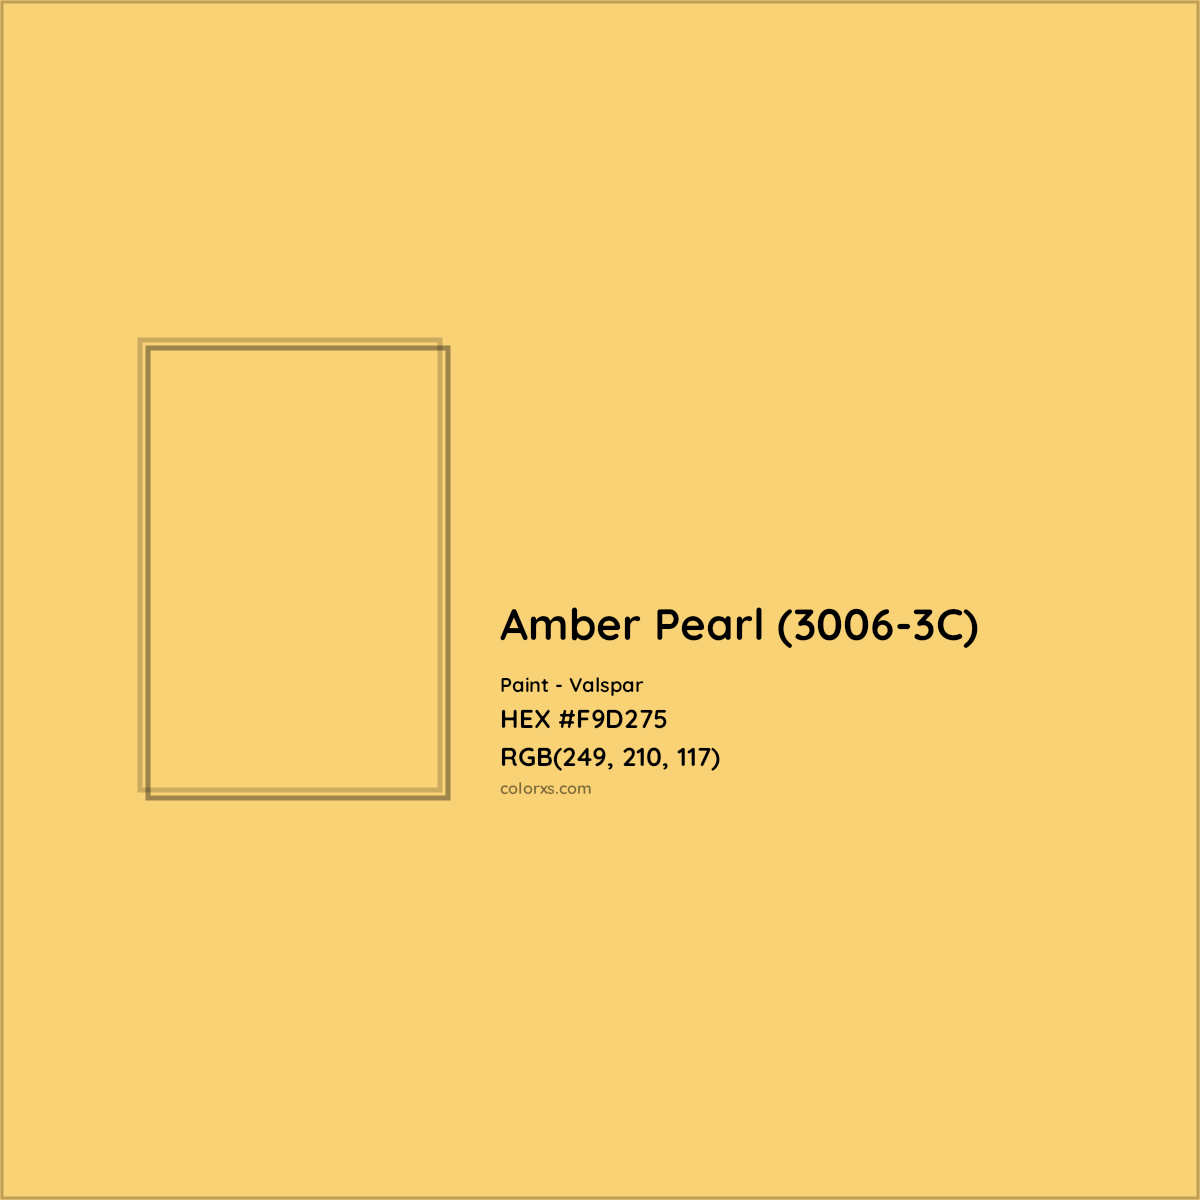 HEX #F9D275 Amber Pearl (3006-3C) Paint Valspar - Color Code